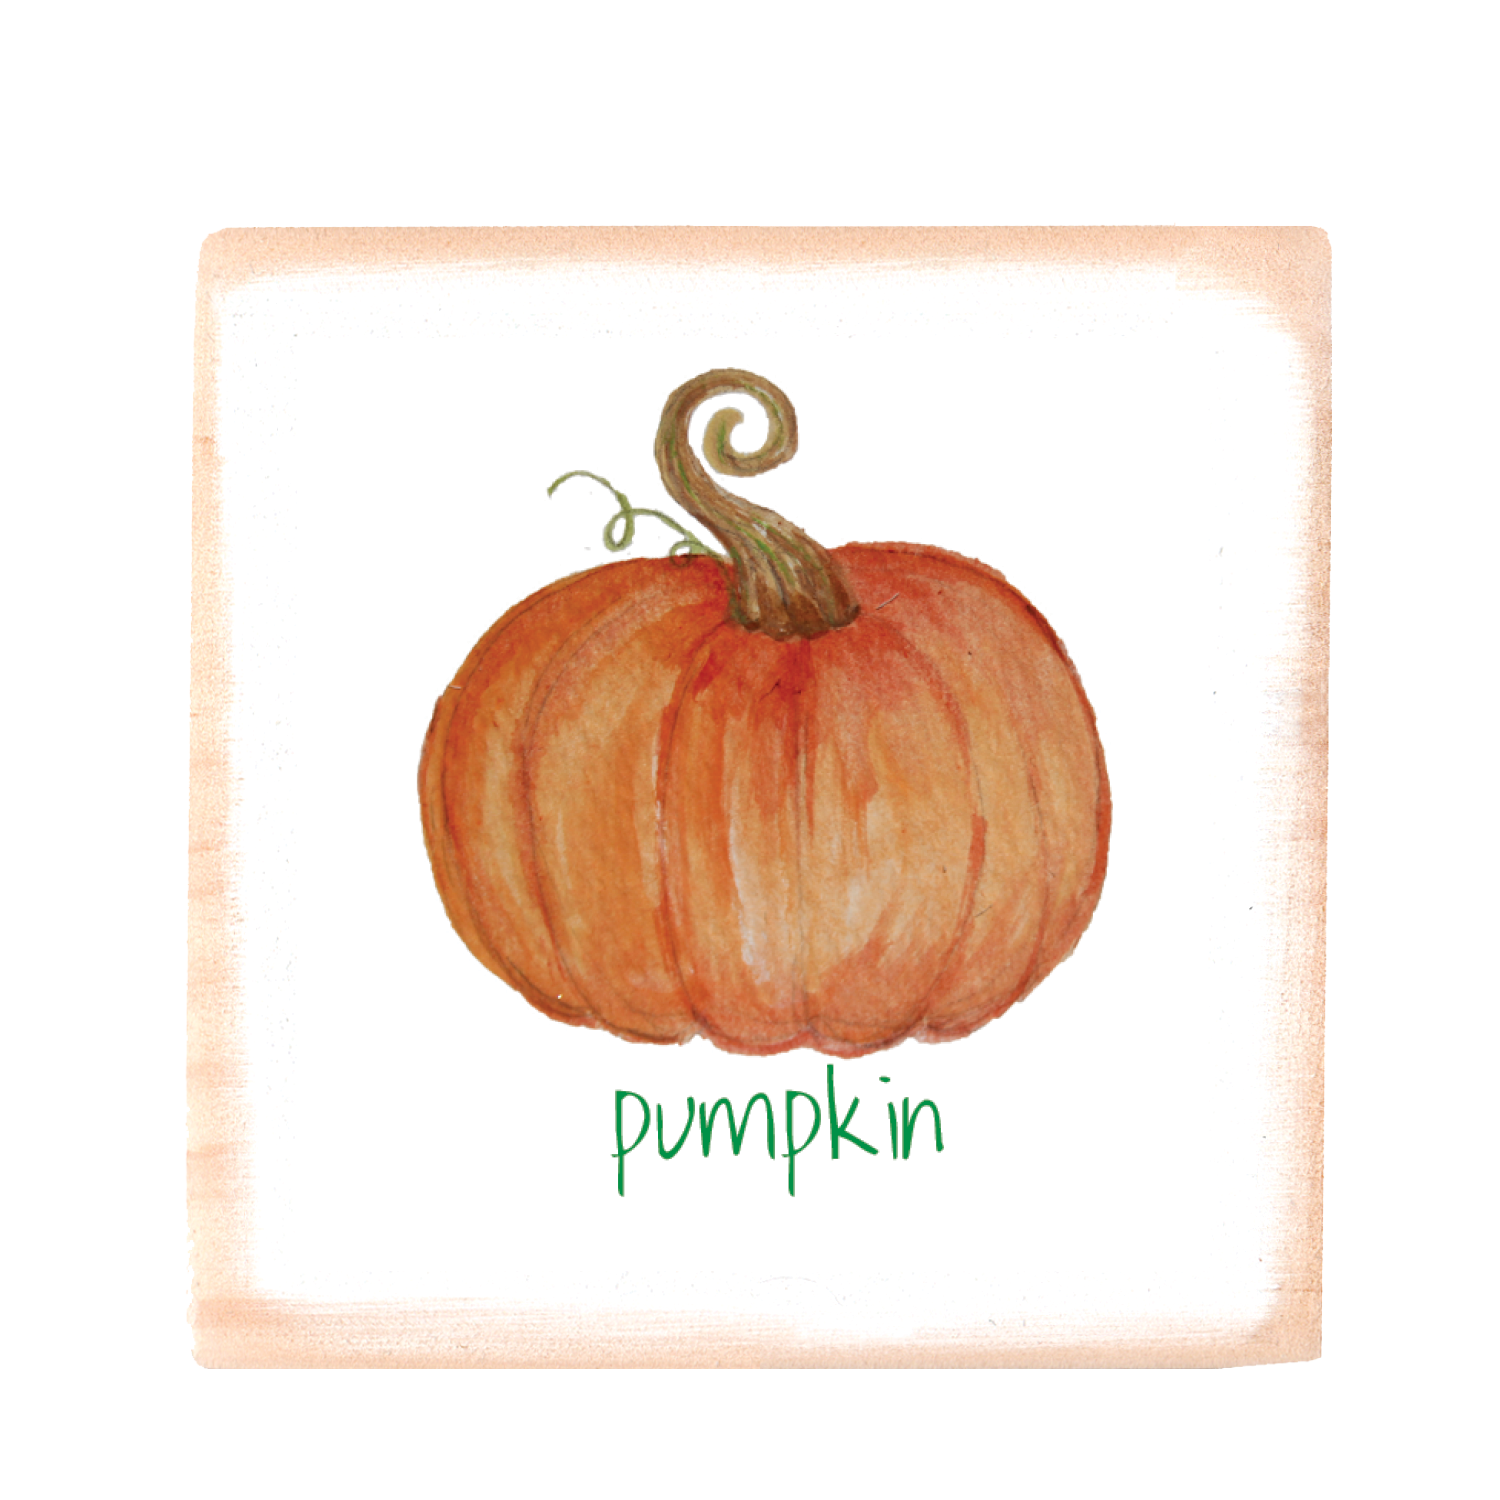 Pumpkin with pumpkin text square wood block